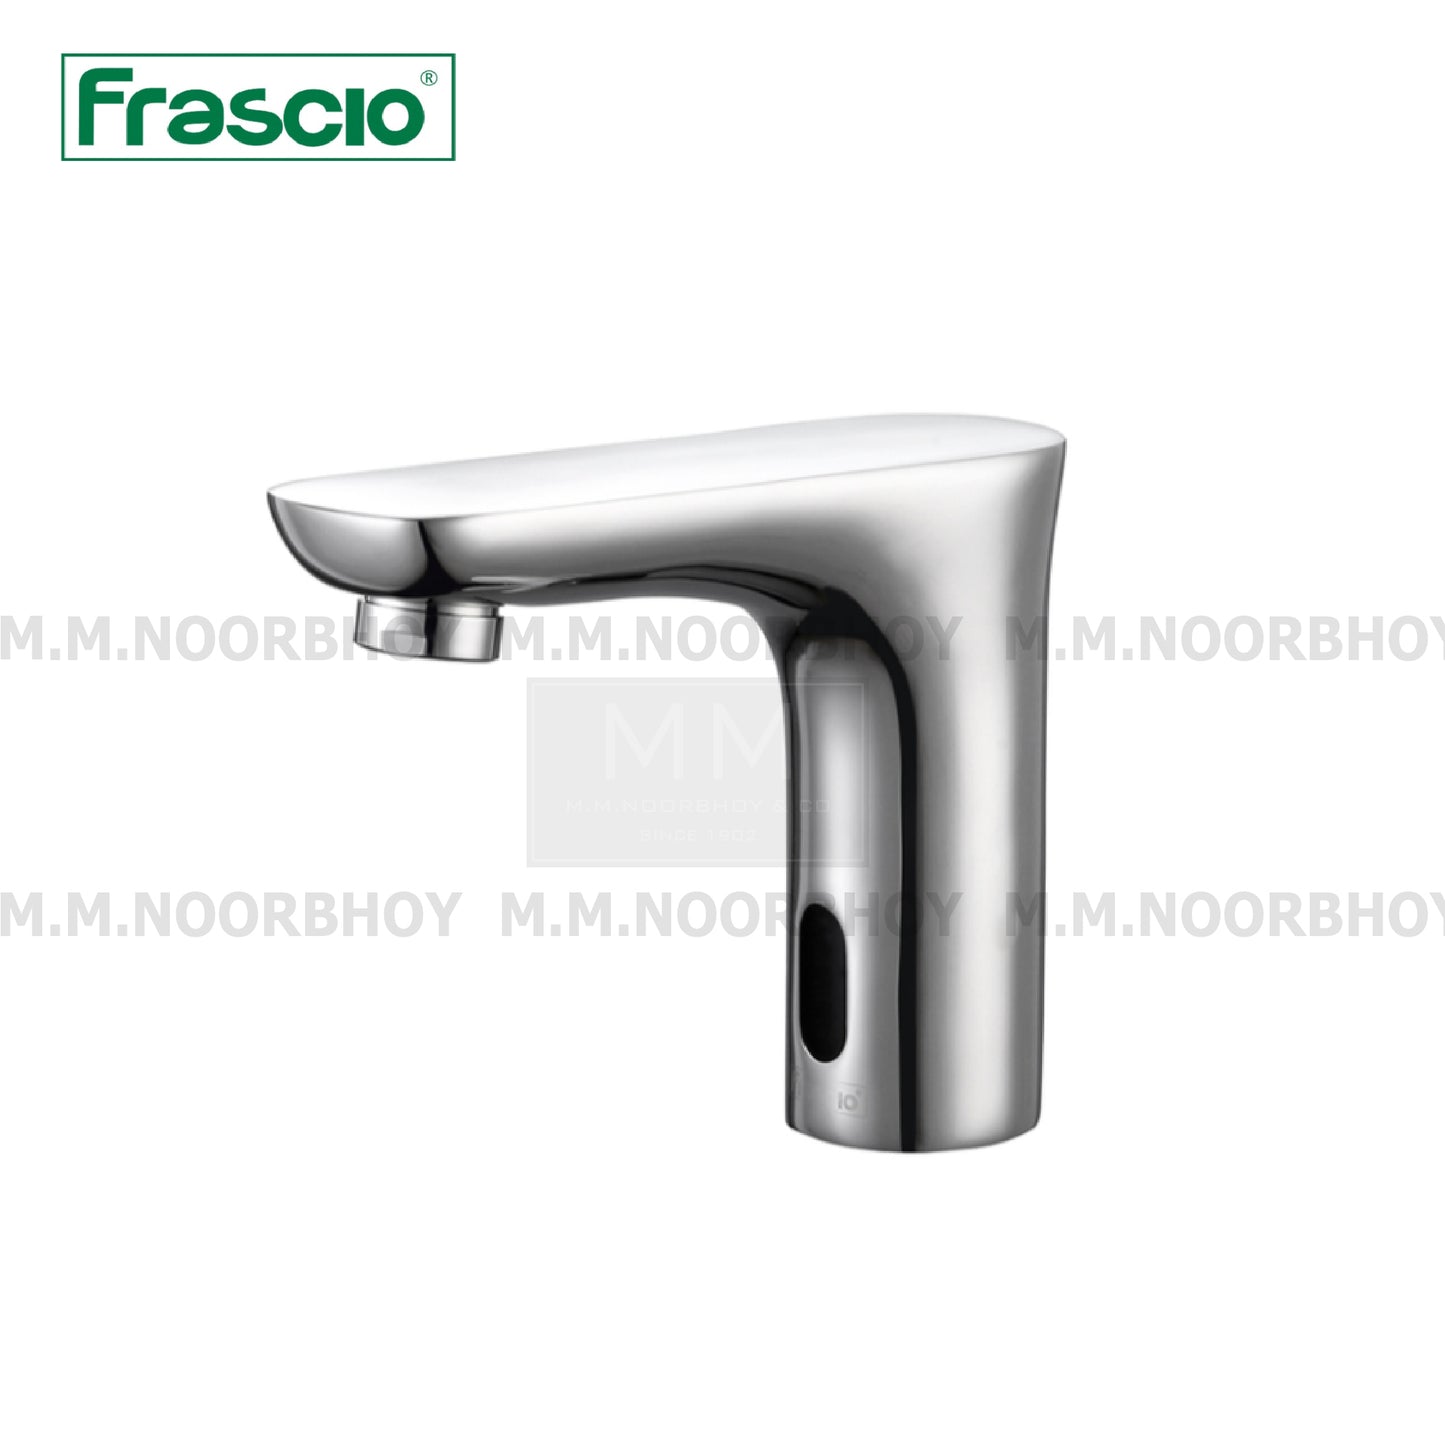 Frascio Faucet Auto Sensor Deck Mount Type, Full Brass Body Chrome plated -FRA1070021